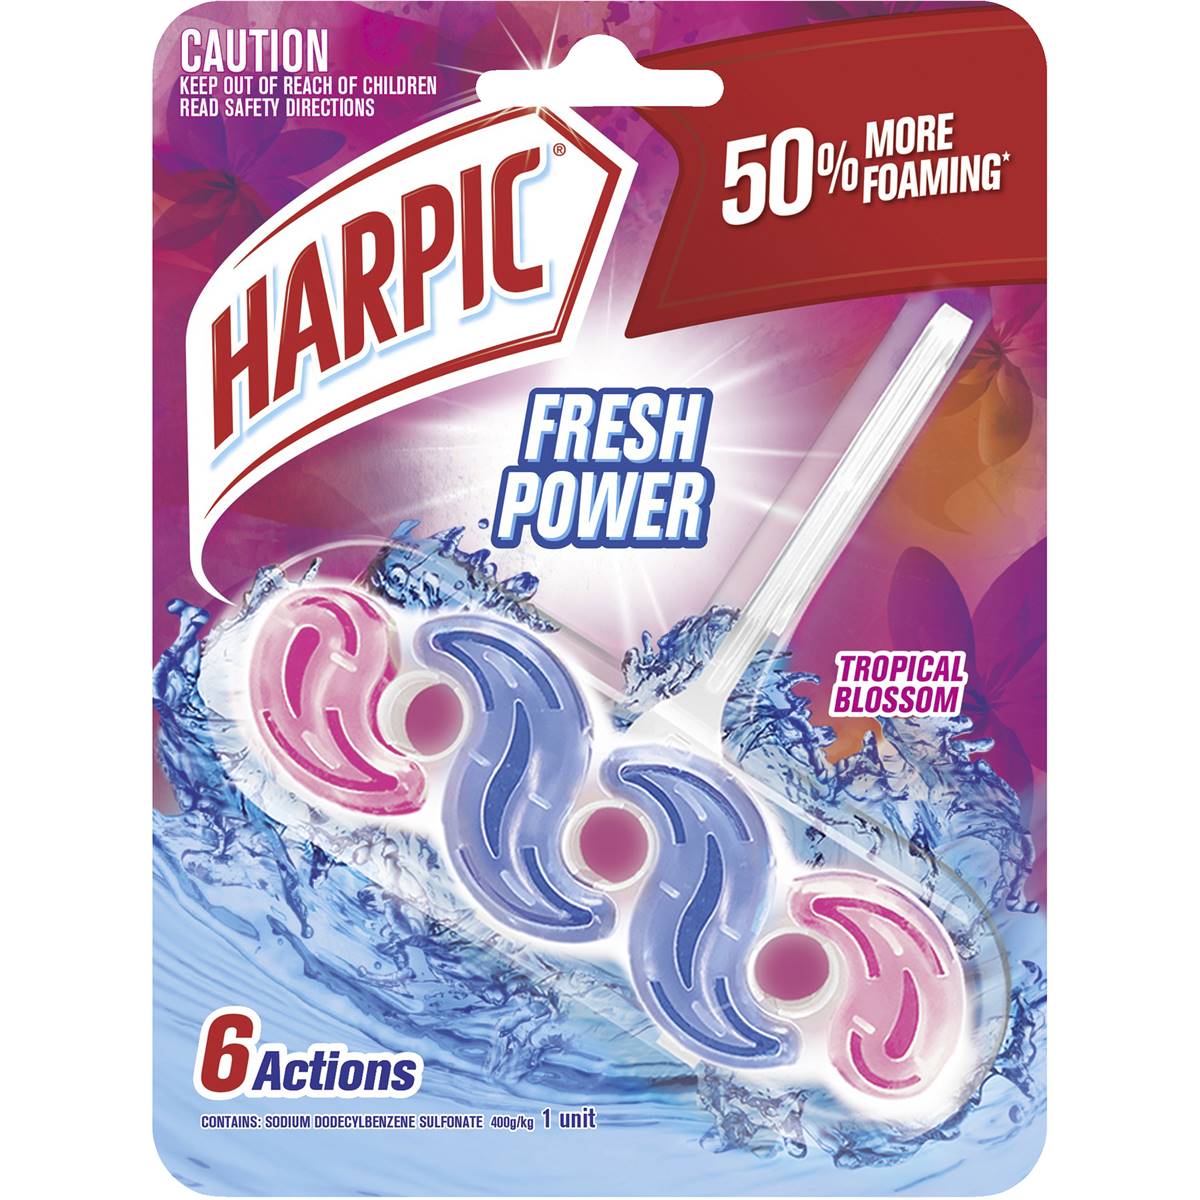 Harpic Fresh Power Tropical Blossom Toilet Block 1 Pack